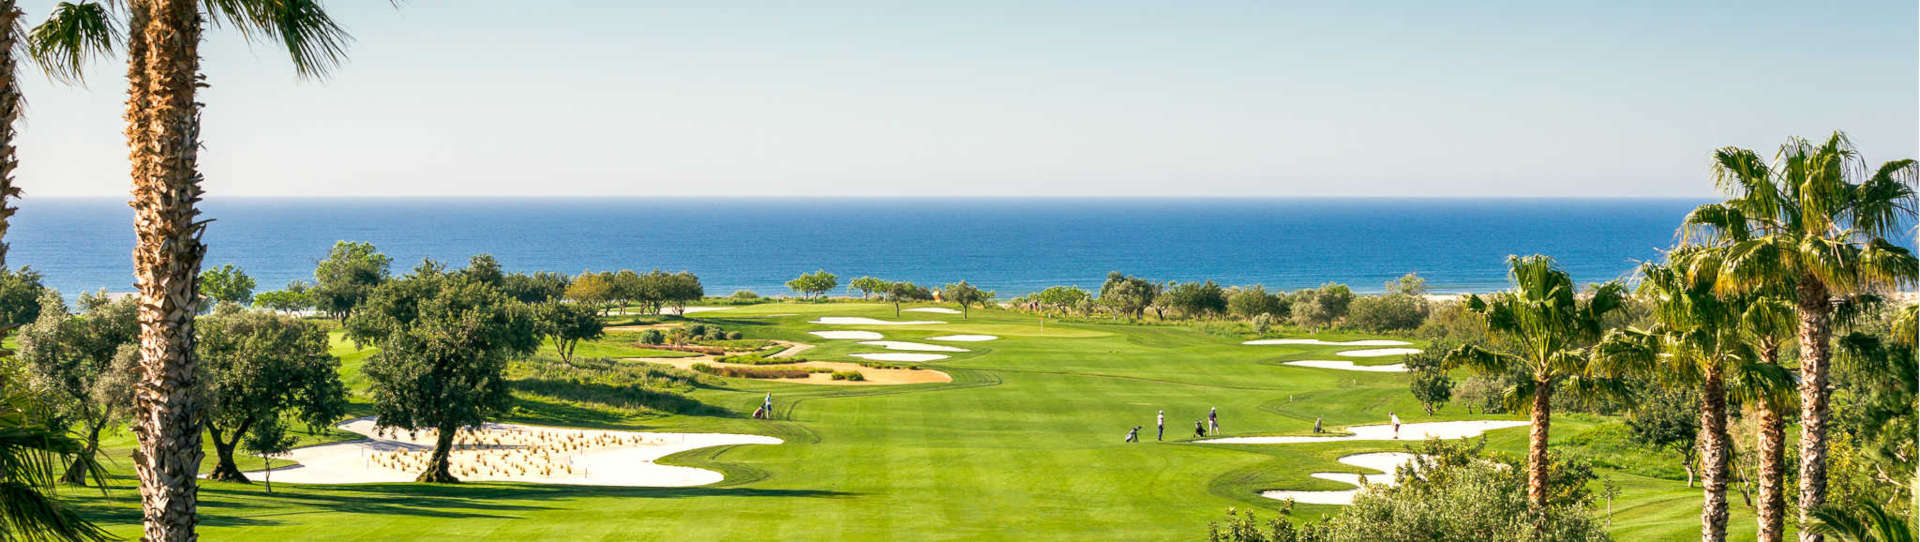 Portugal golf courses - Quinta da Ria Golf Course - Photo 3